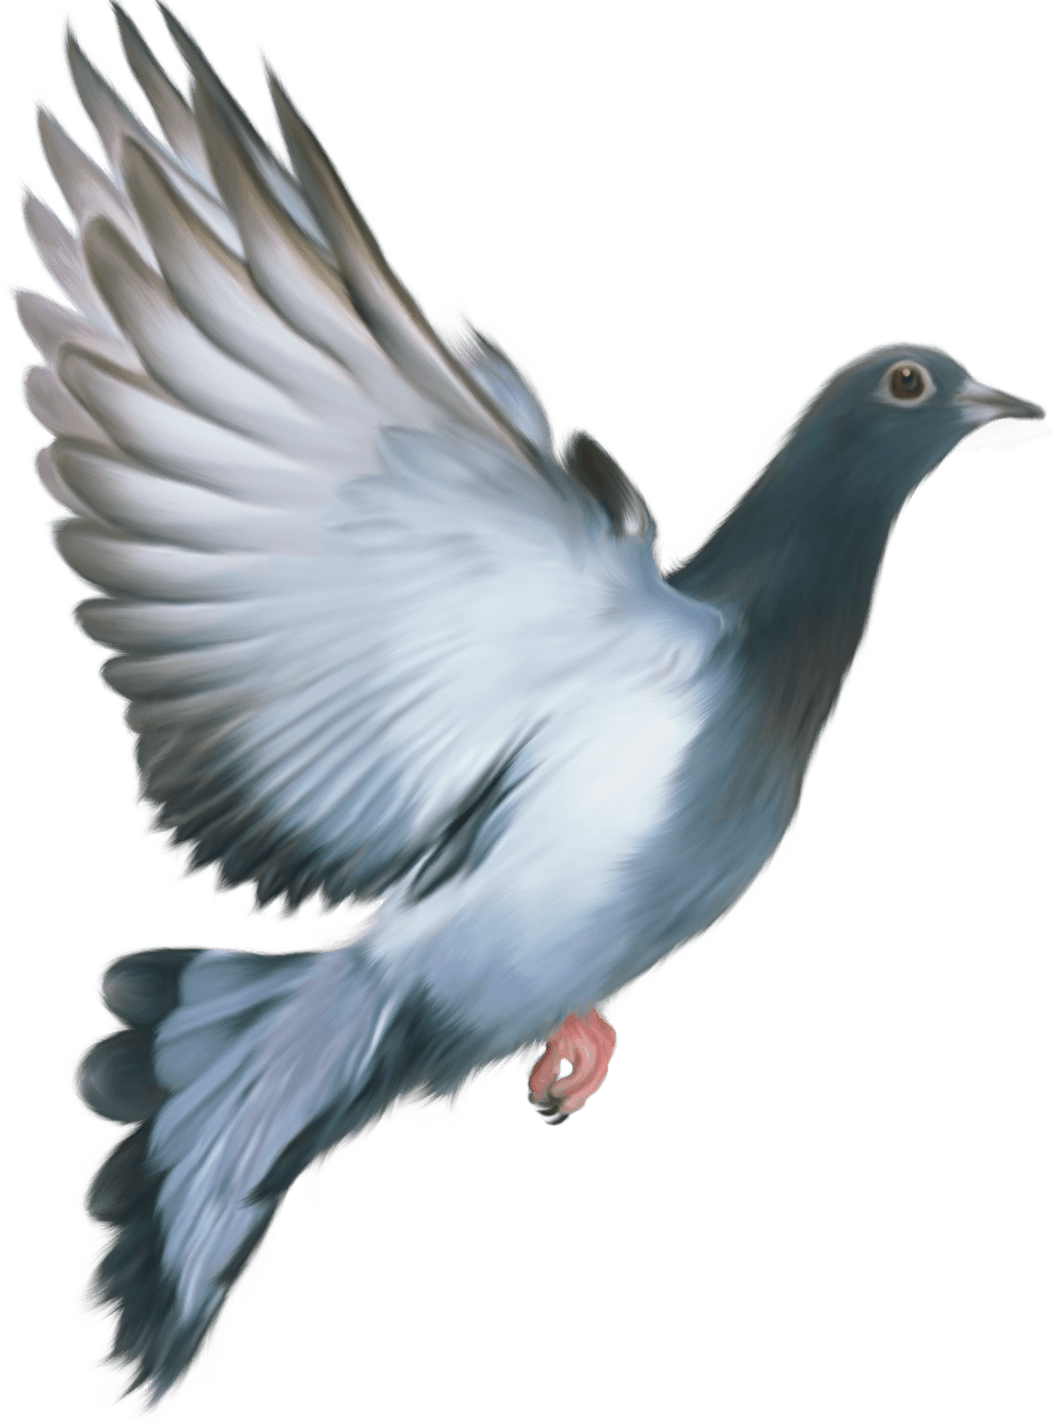 Pigeon Png Image PNG Image